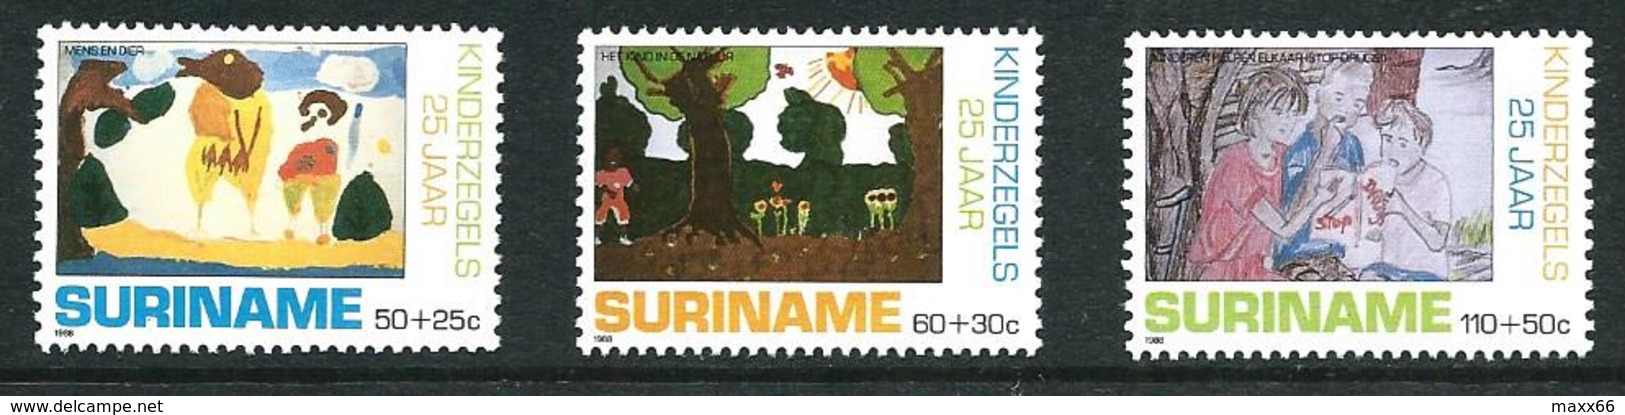 SURINAME MNH - 1988 The 25th Anniversary Of Child Welfare Stamps - Vari Cent - Michel SR 1283 1285 - Suriname